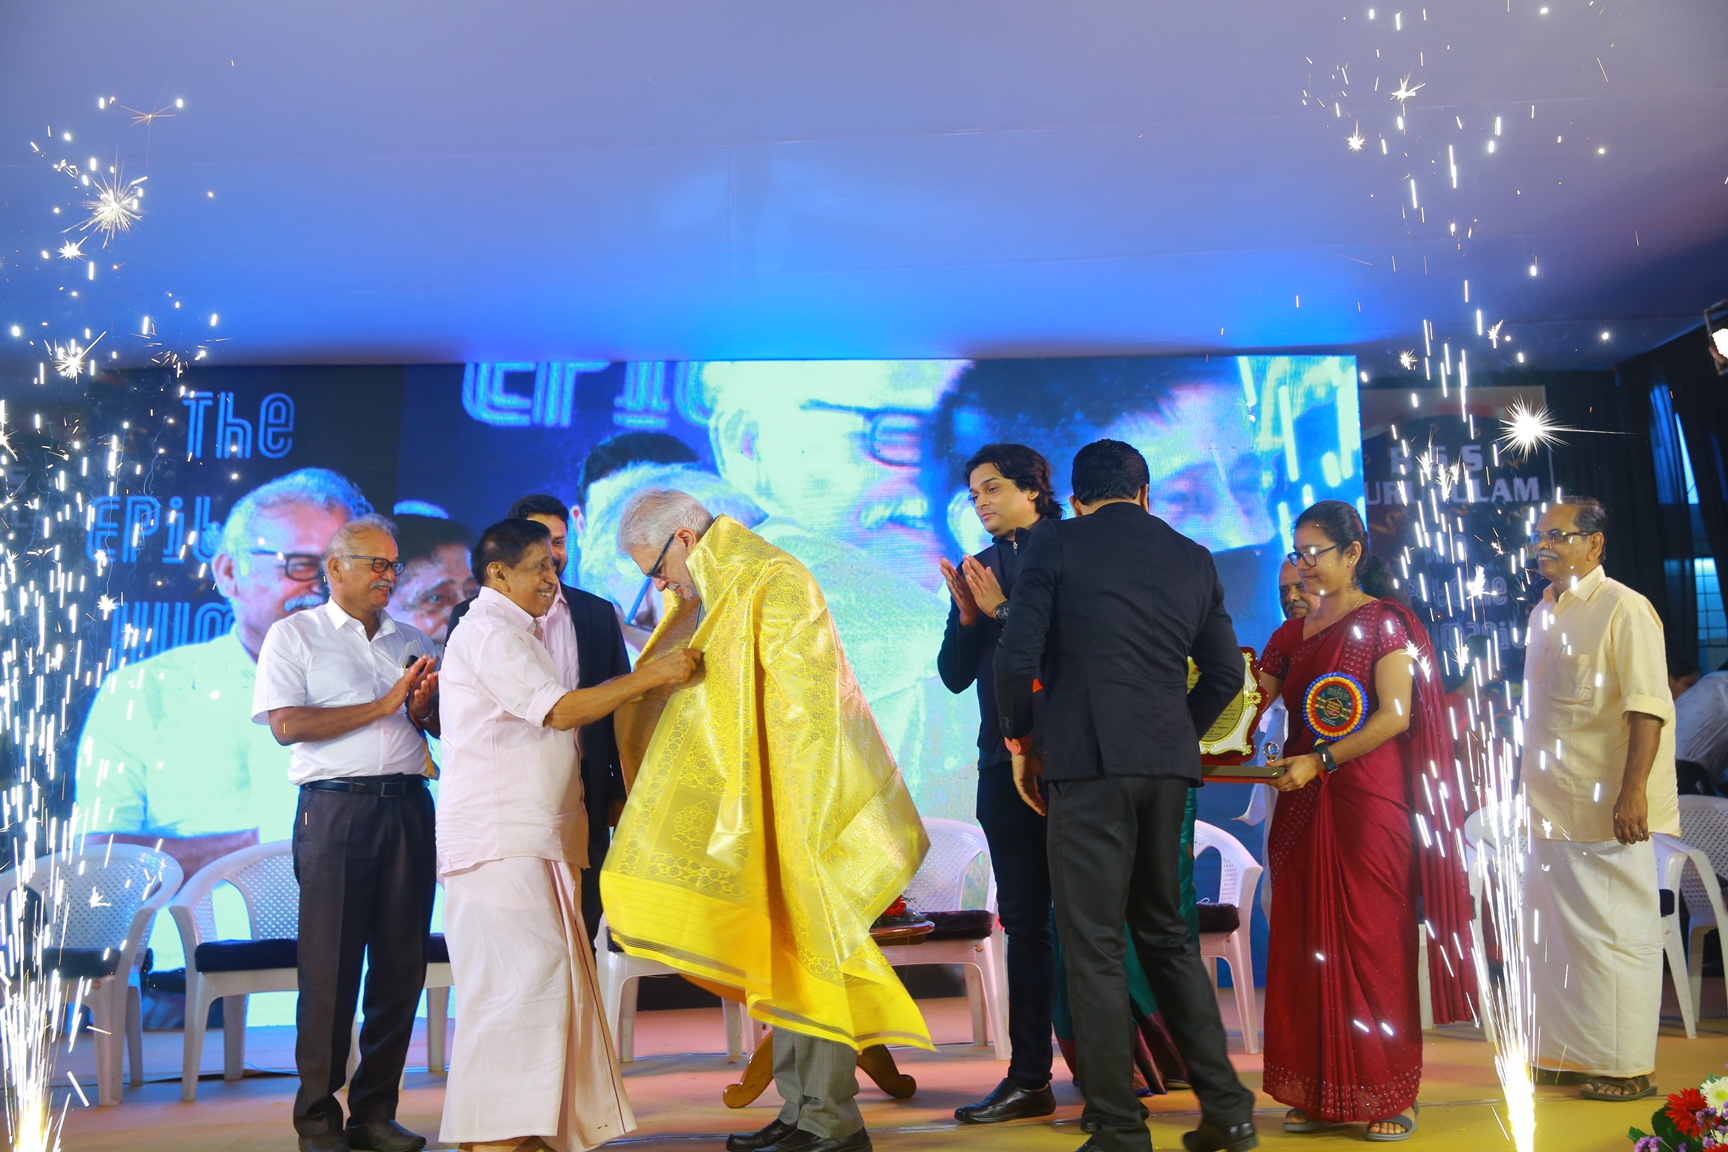 BSS Gurukulam Golden Jubilee Inauguration